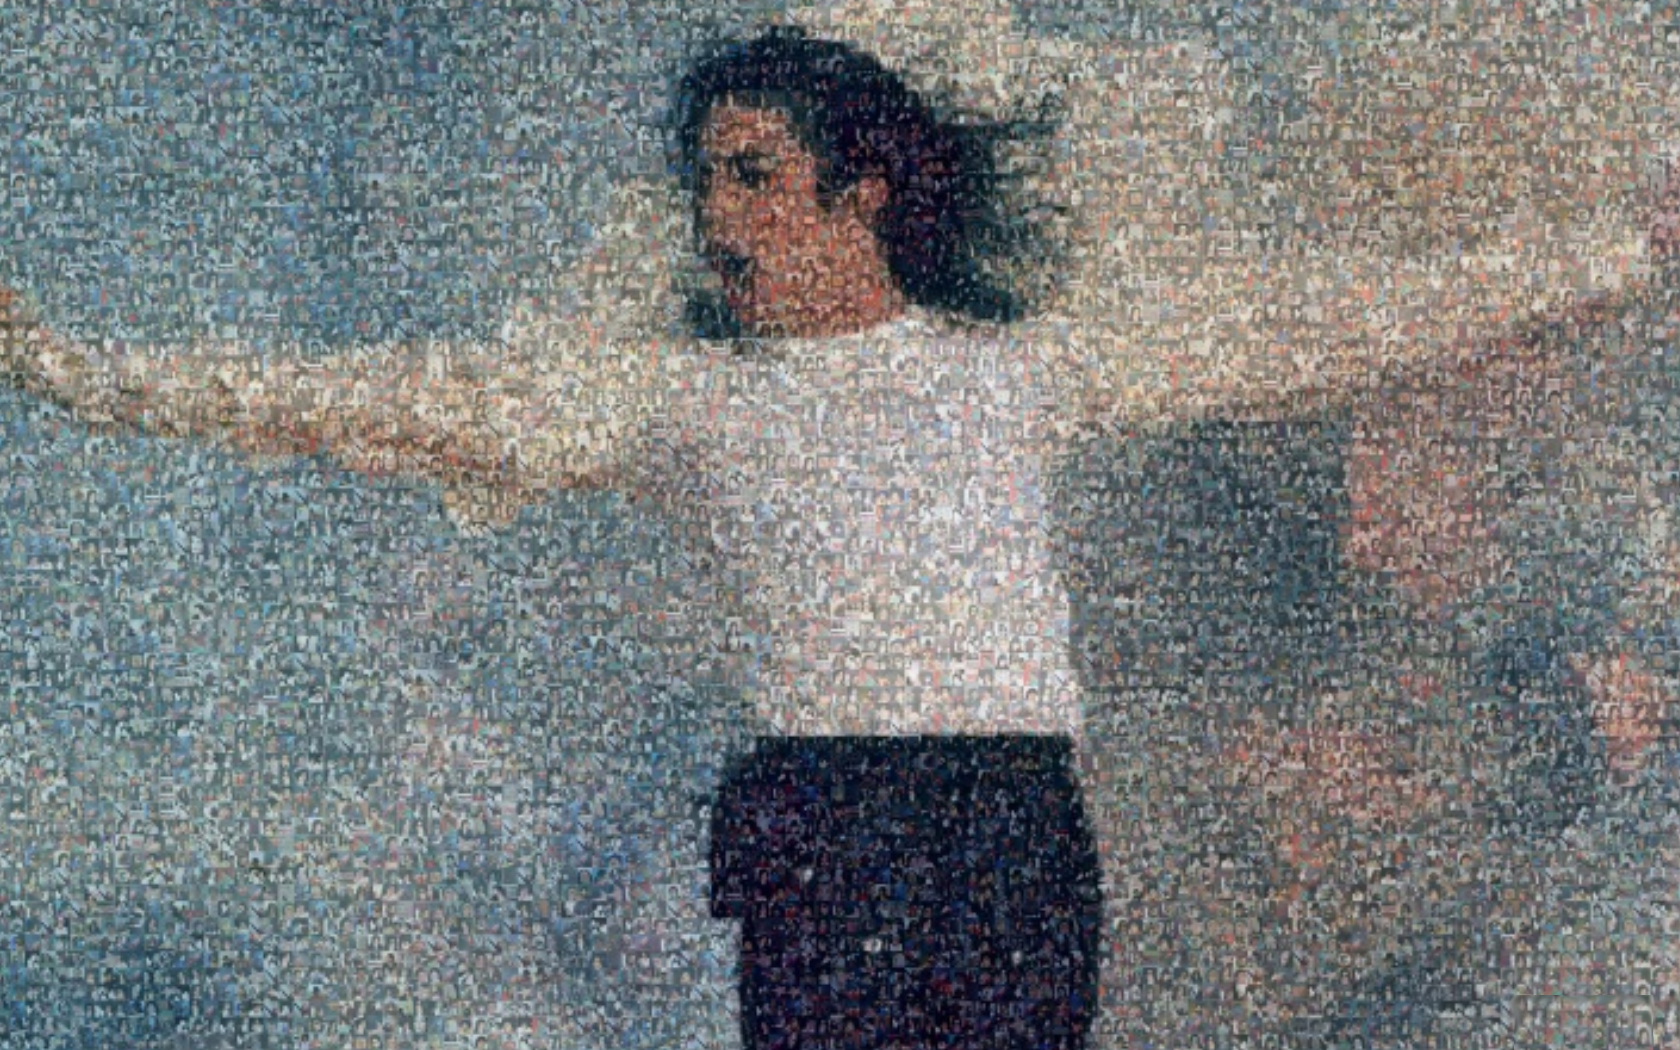 Michael_Jackson_tribute_wall_by_frey84